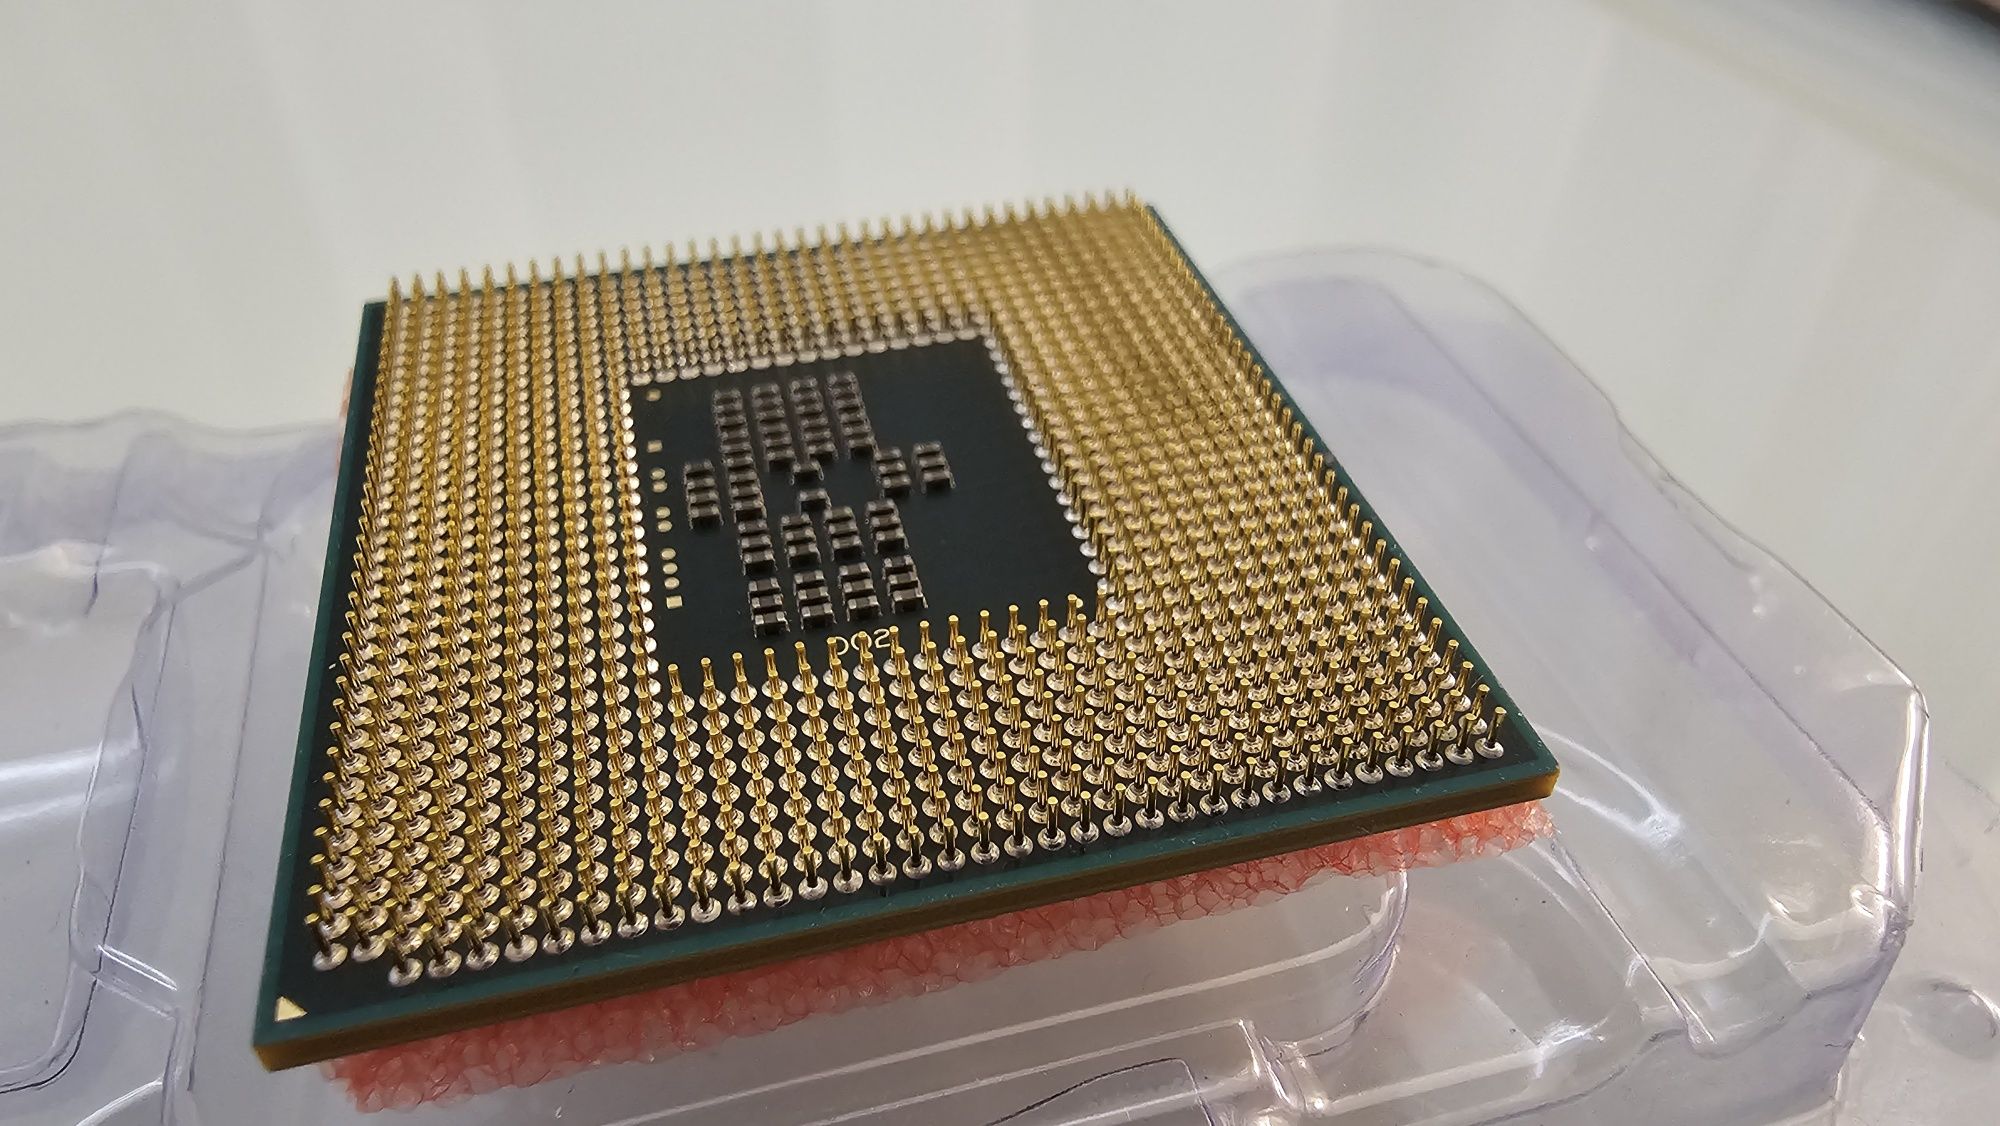 Procesor Intel I7 740QM